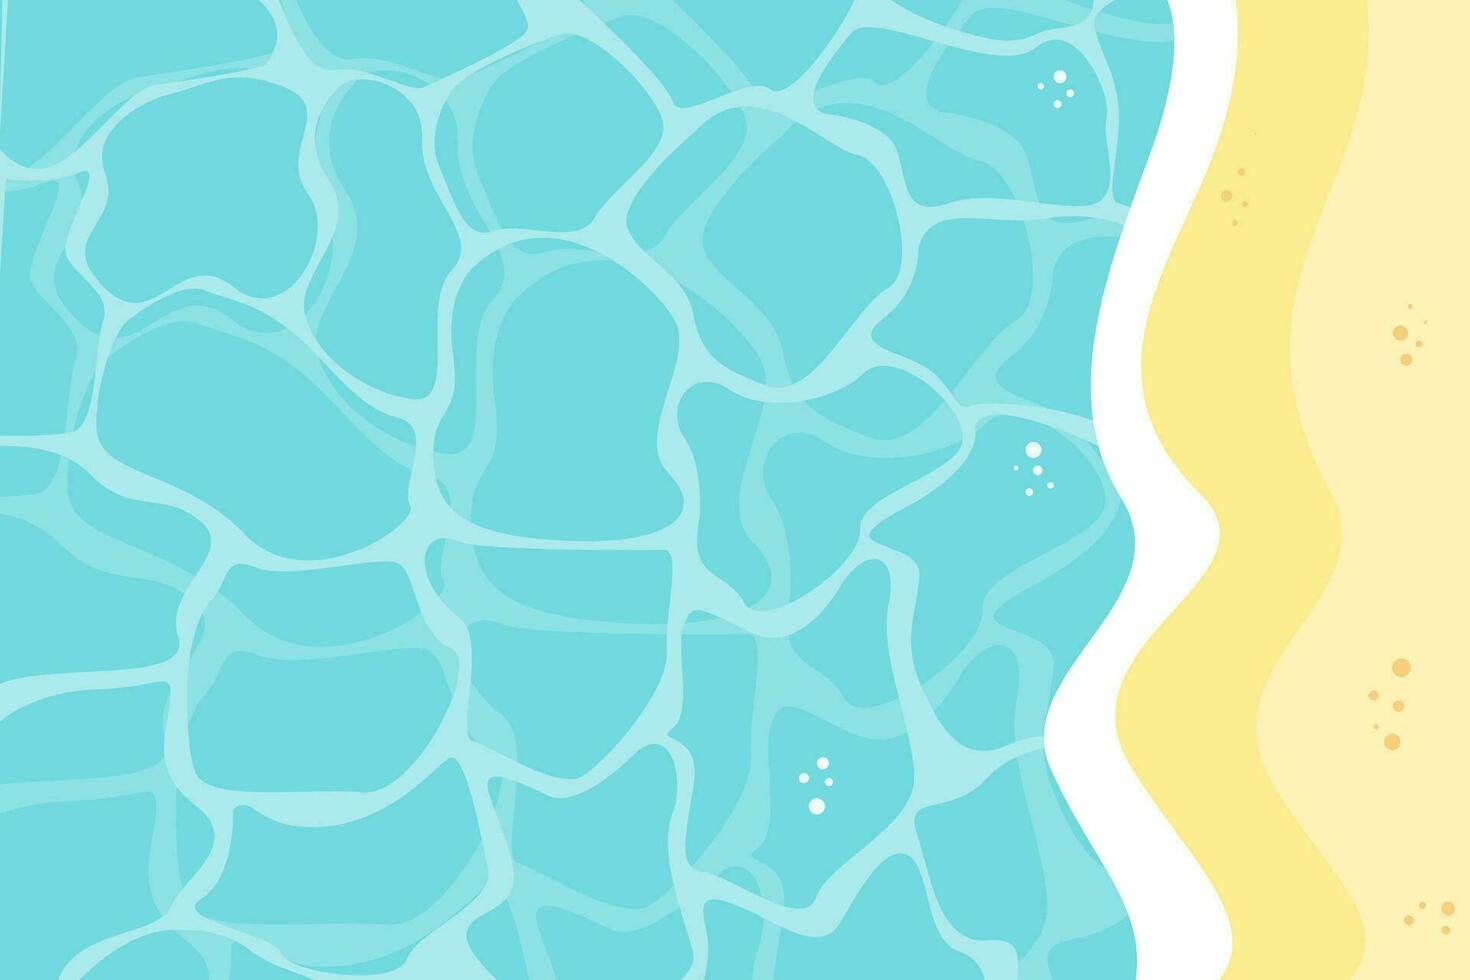 sea beach pattern background. template summer concept. vector illustration